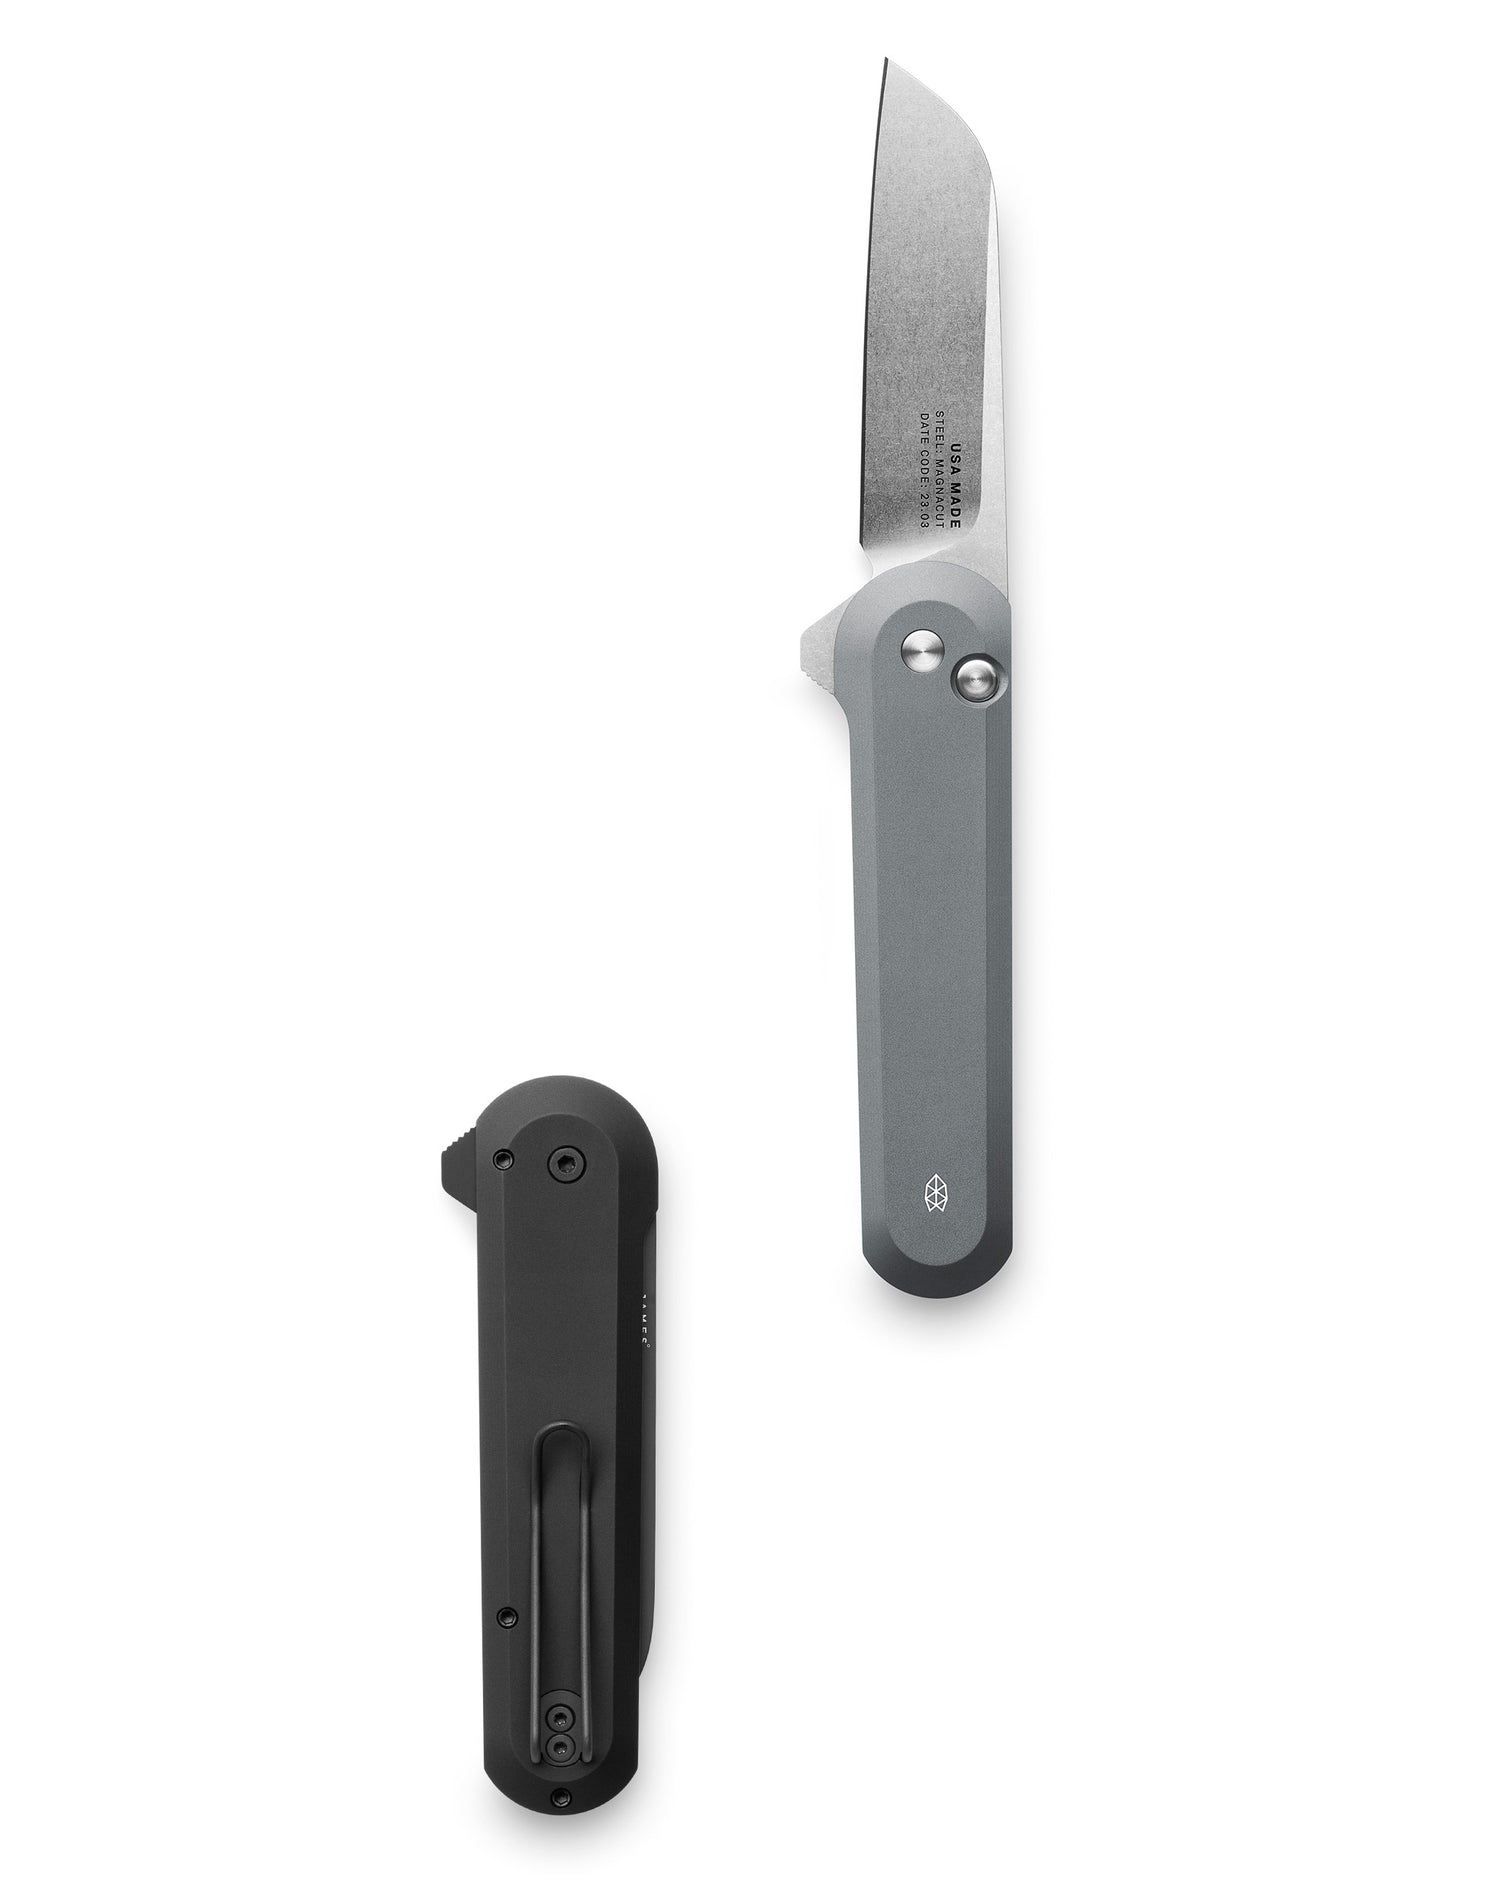 Minimalist EDC Pocket Knives : The James Brand The Wells